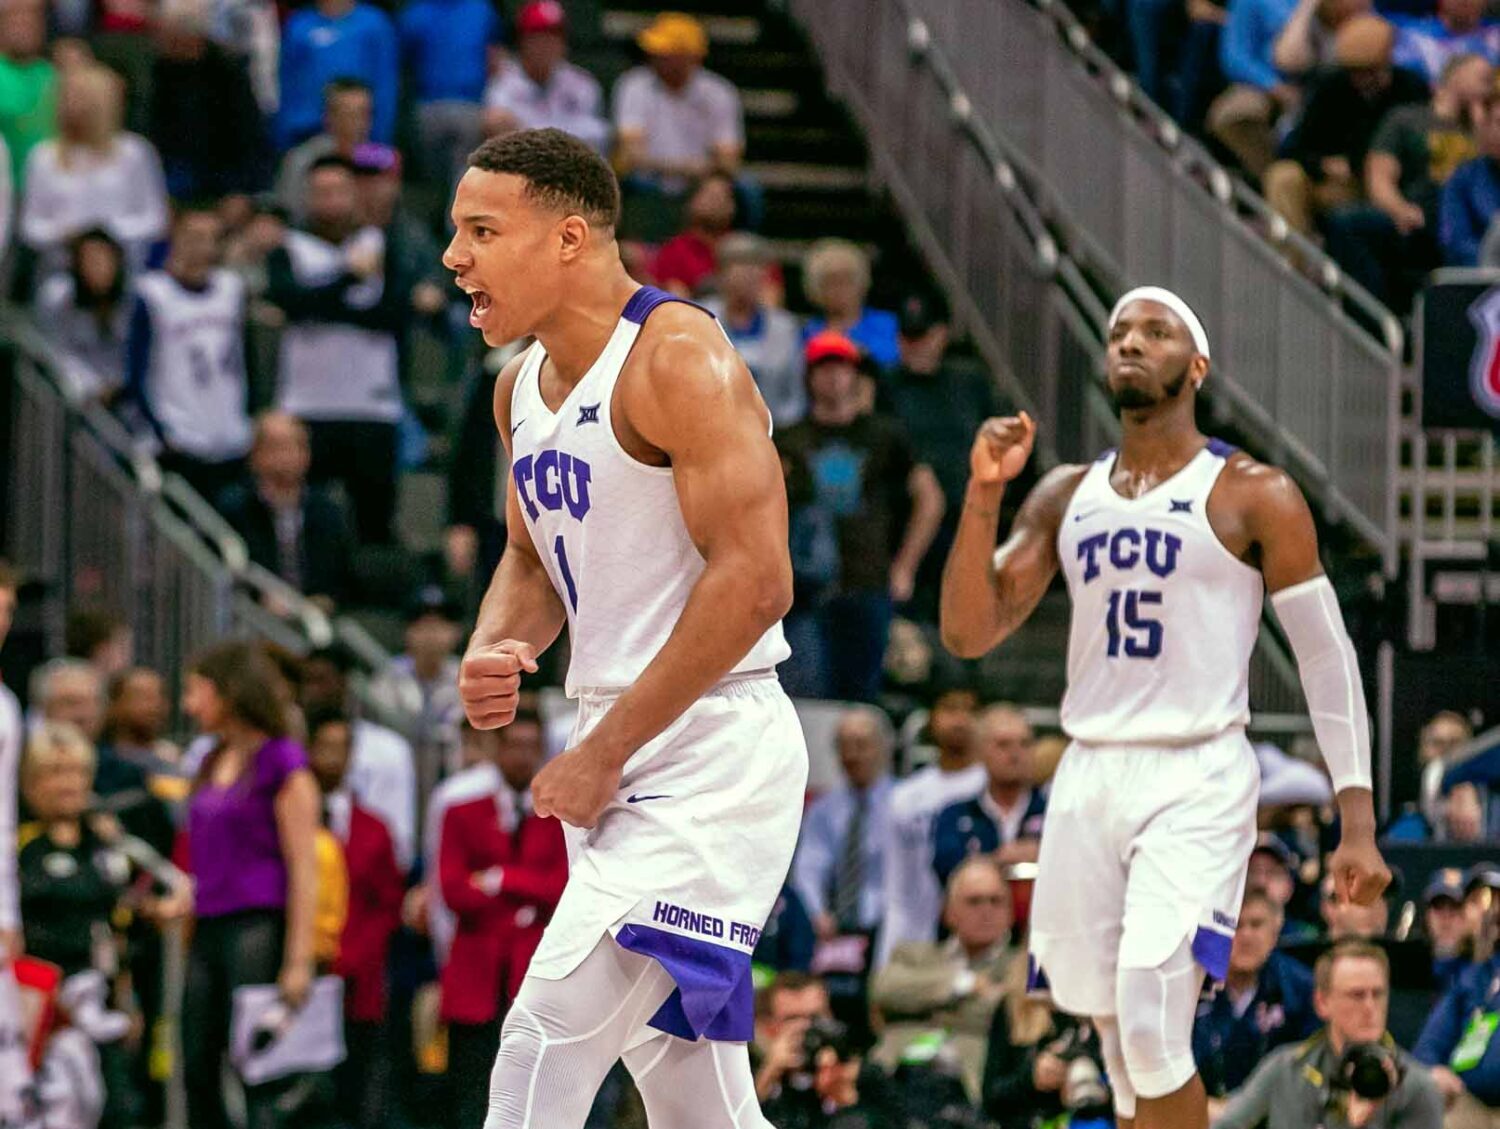 NBA draft: Phoenix Suns appear interested in TCU guard Desmond Bane